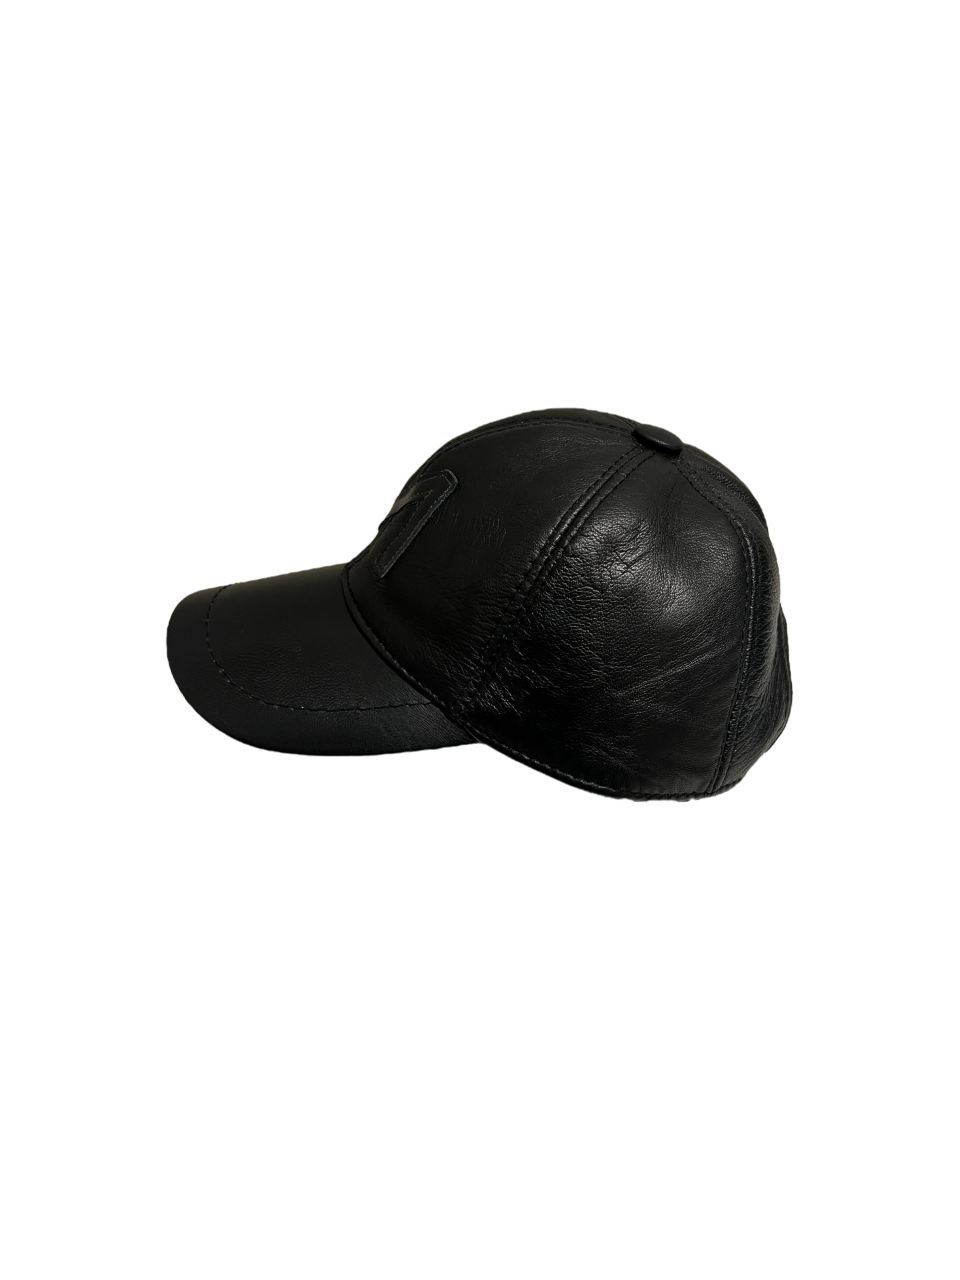 APOLINAR Black hat black logo